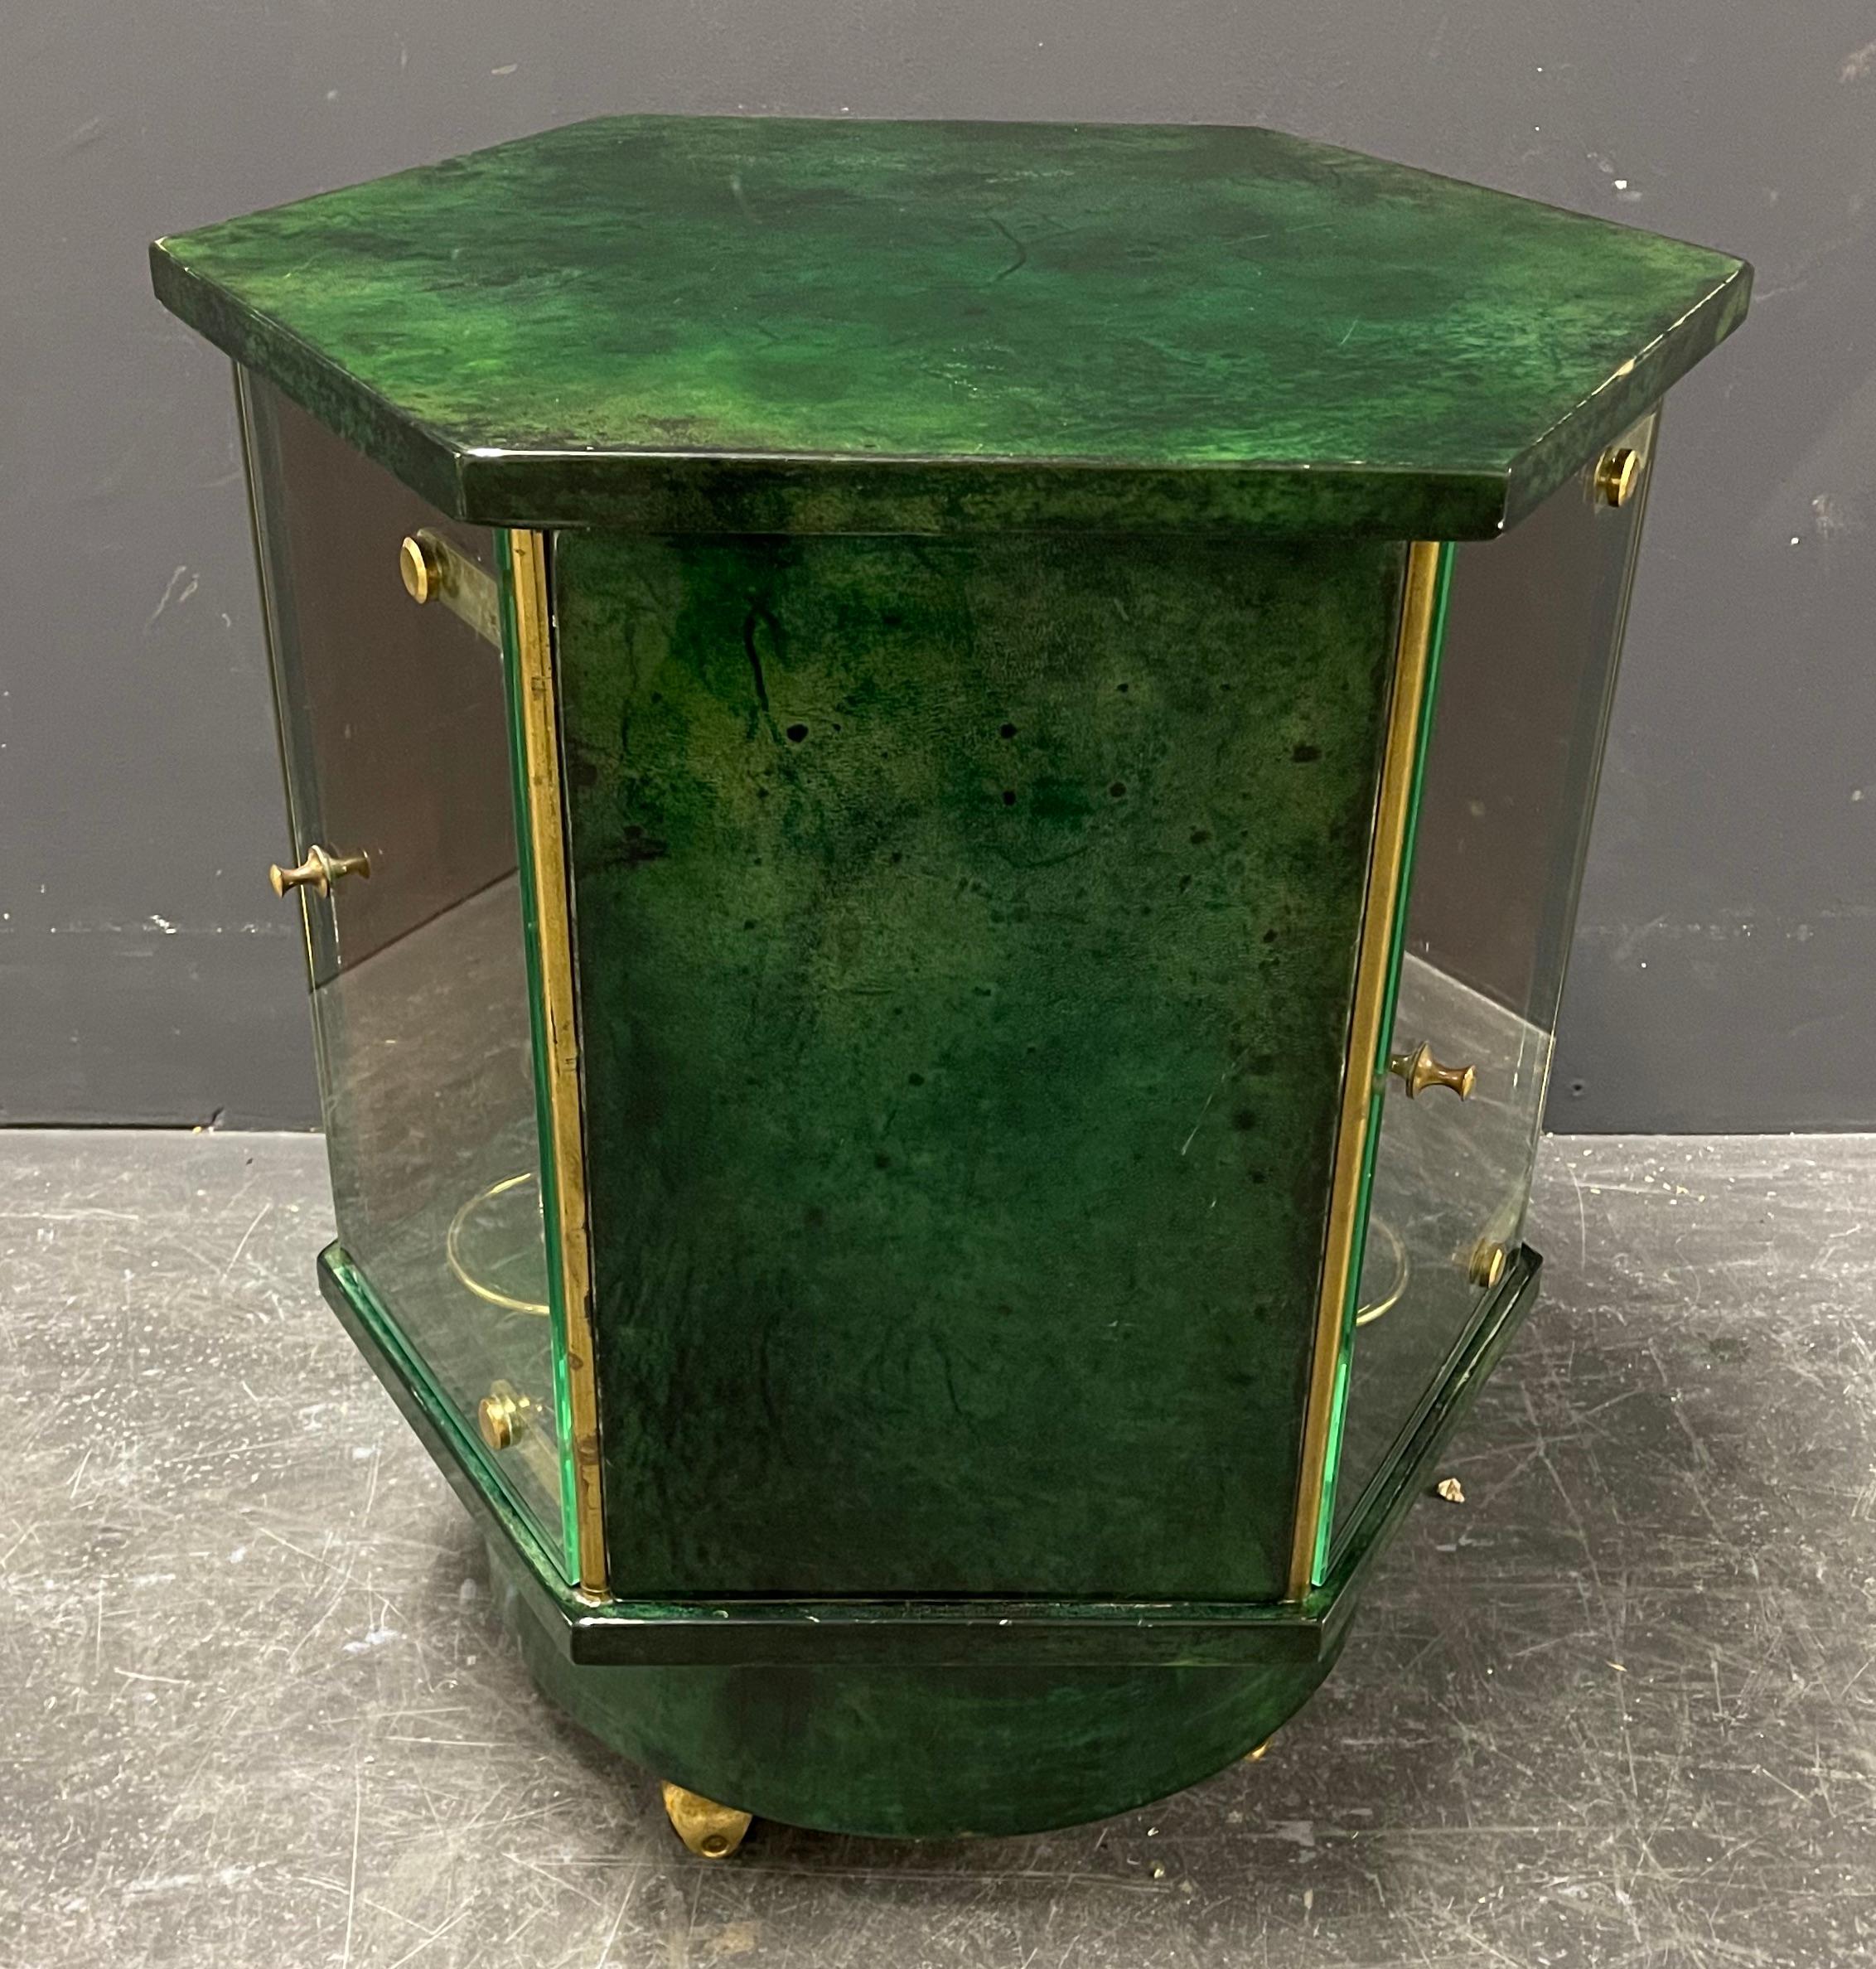 Elegant Aldo Tura bar cart on brass wheels in hexagonal shape with three glass doors and a rotating bottle holder inside.